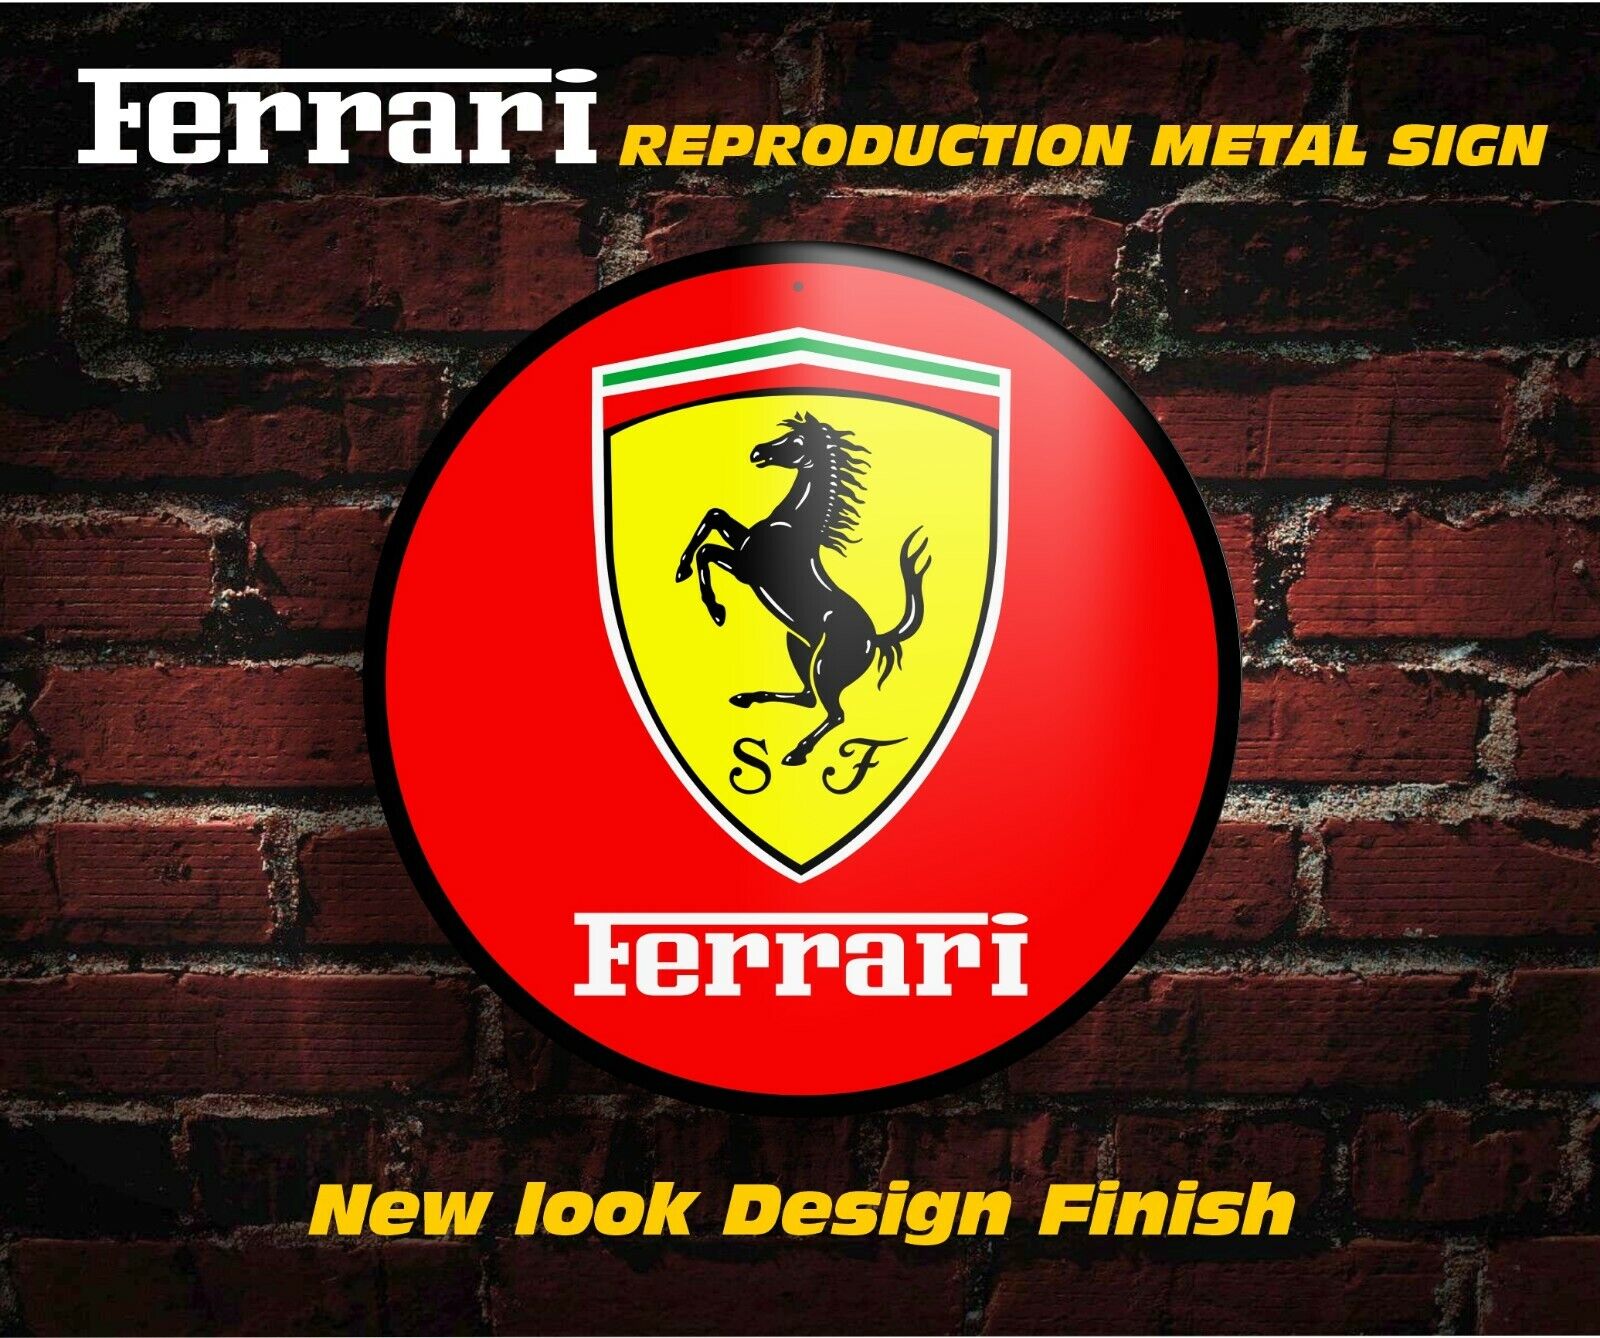 Ferrari Reproduction Metal Garage Wall Sign - MADE IN USA